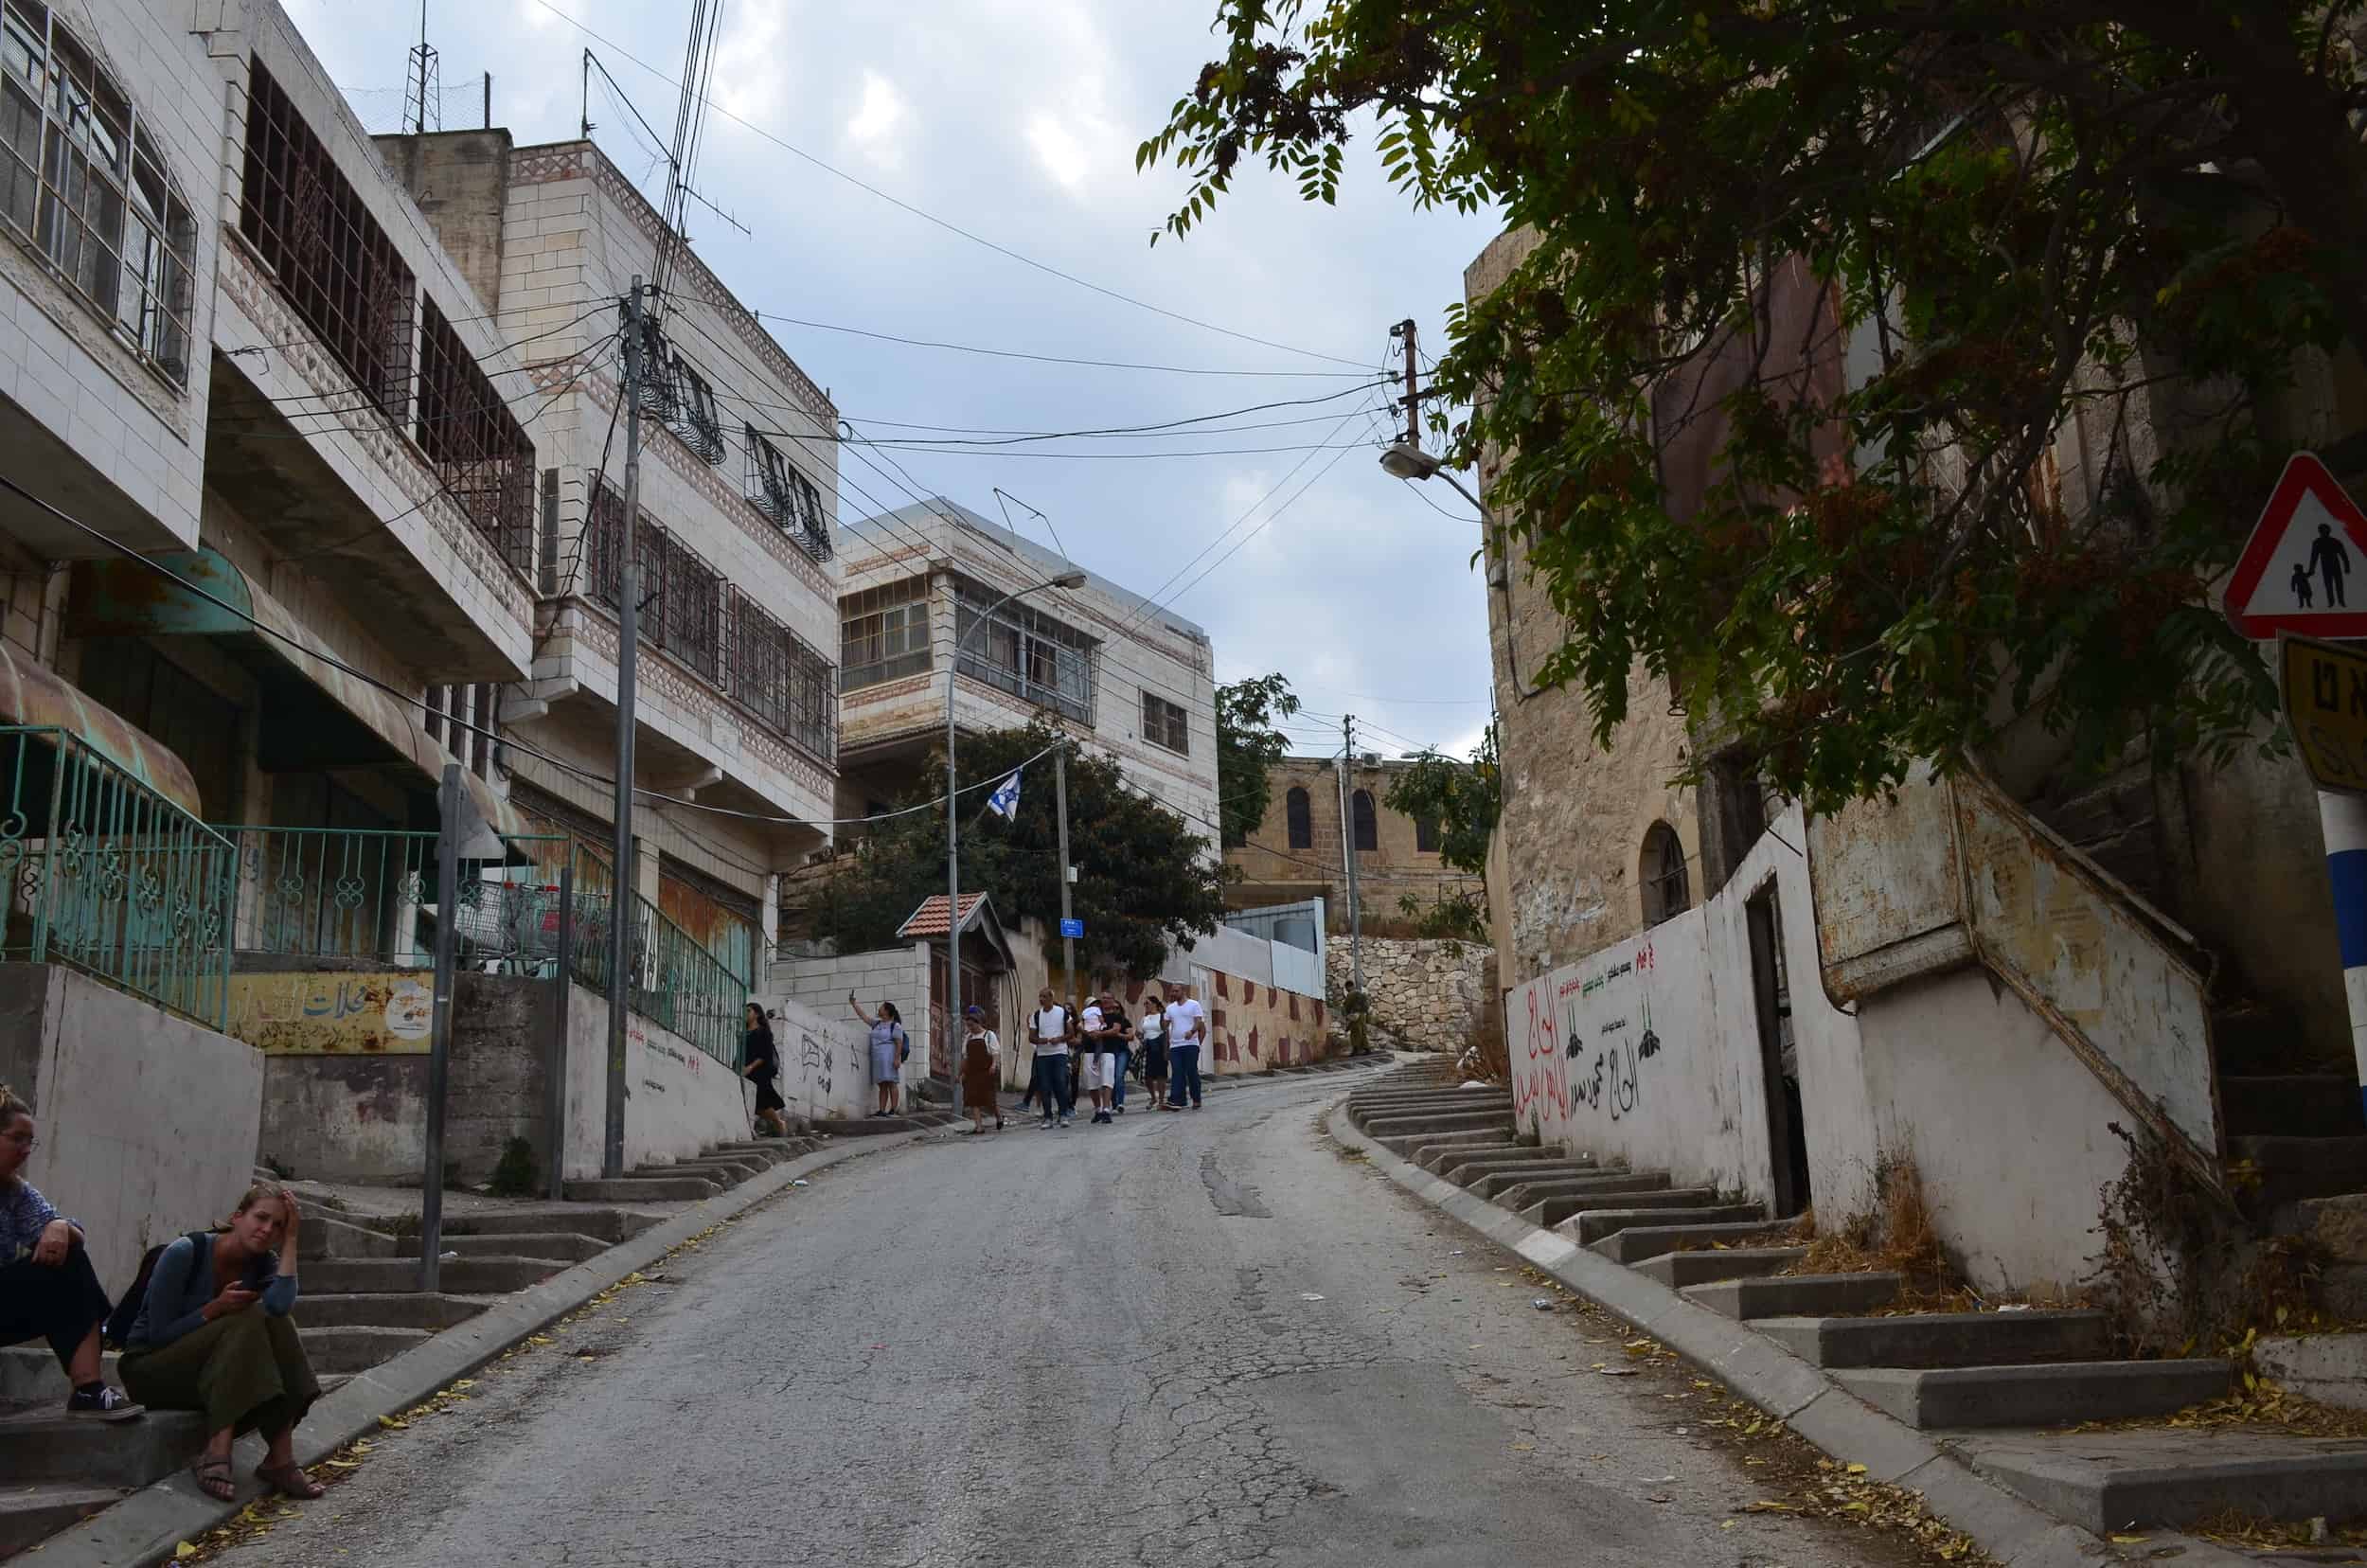 Walking up to Tel Rumeida